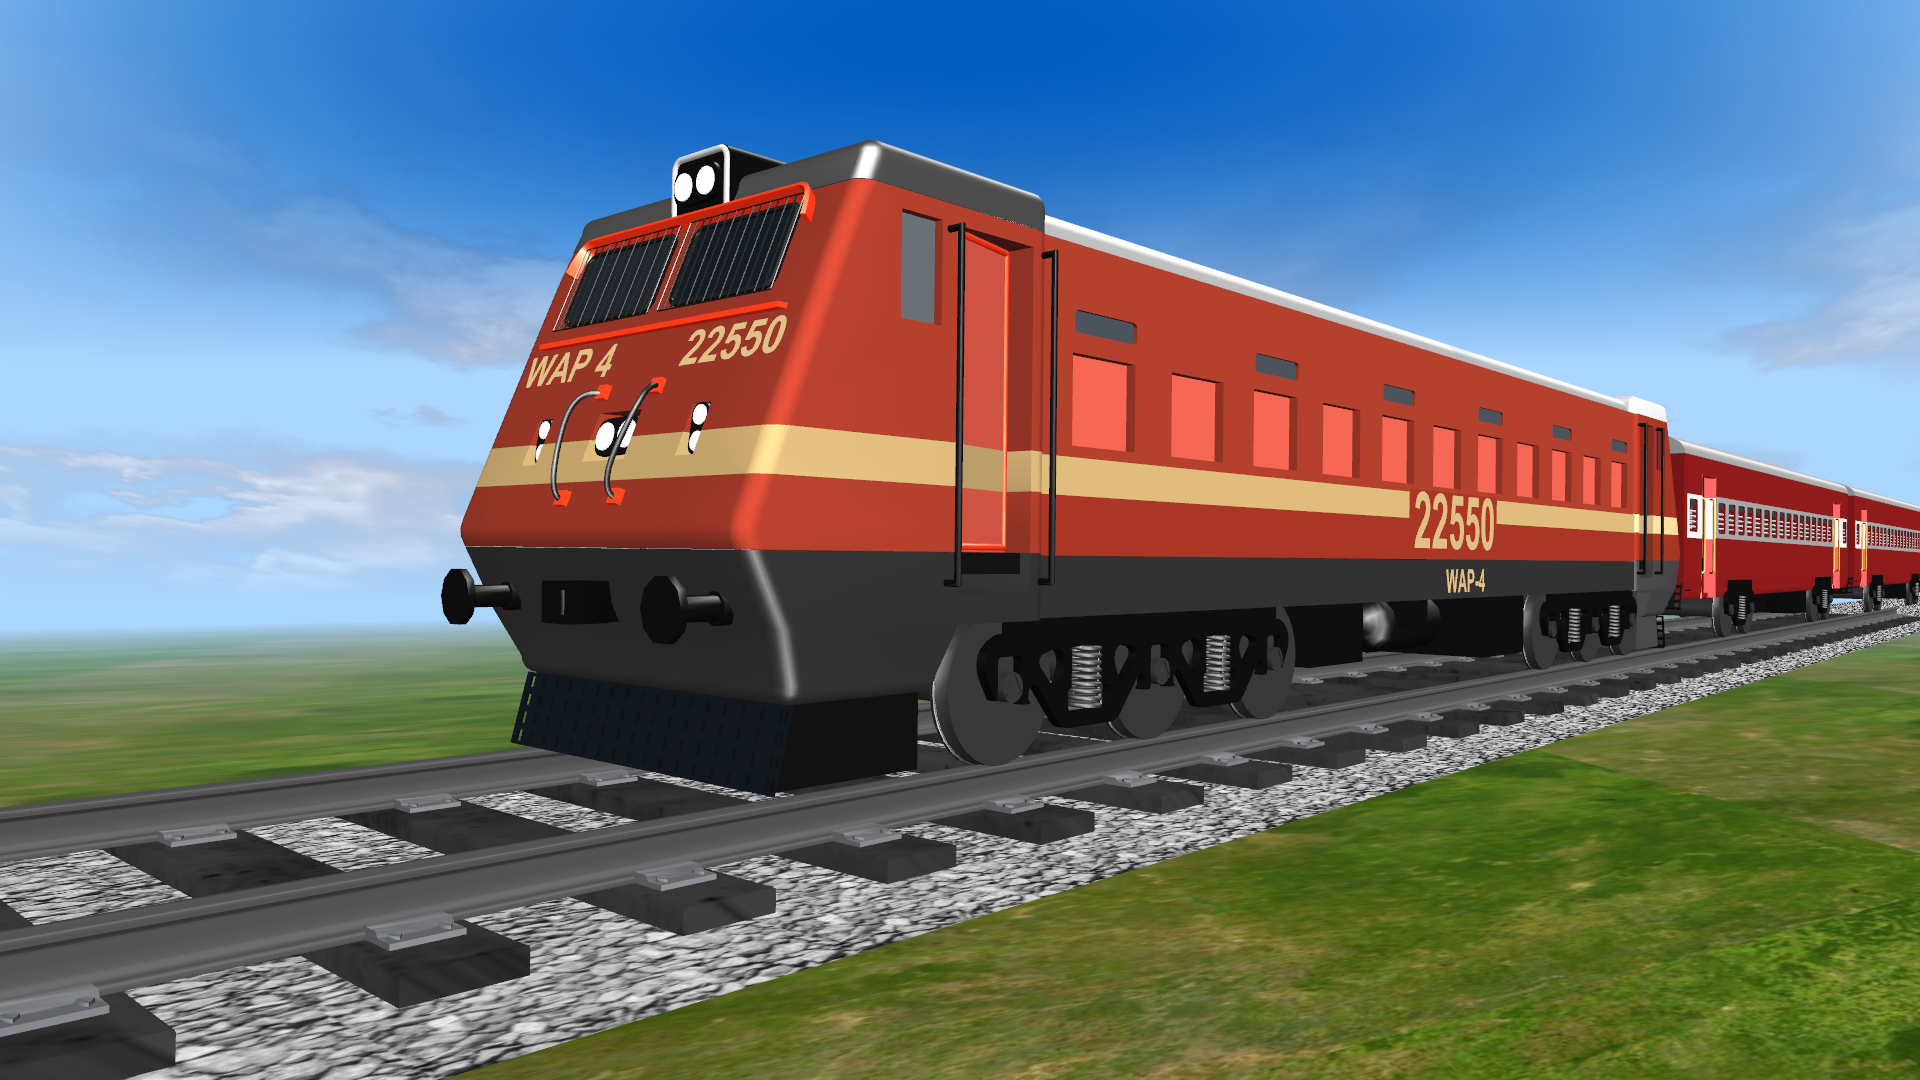 Train Engine India - Train Interior 3d Model Free Download - 1920x1080  Wallpaper 